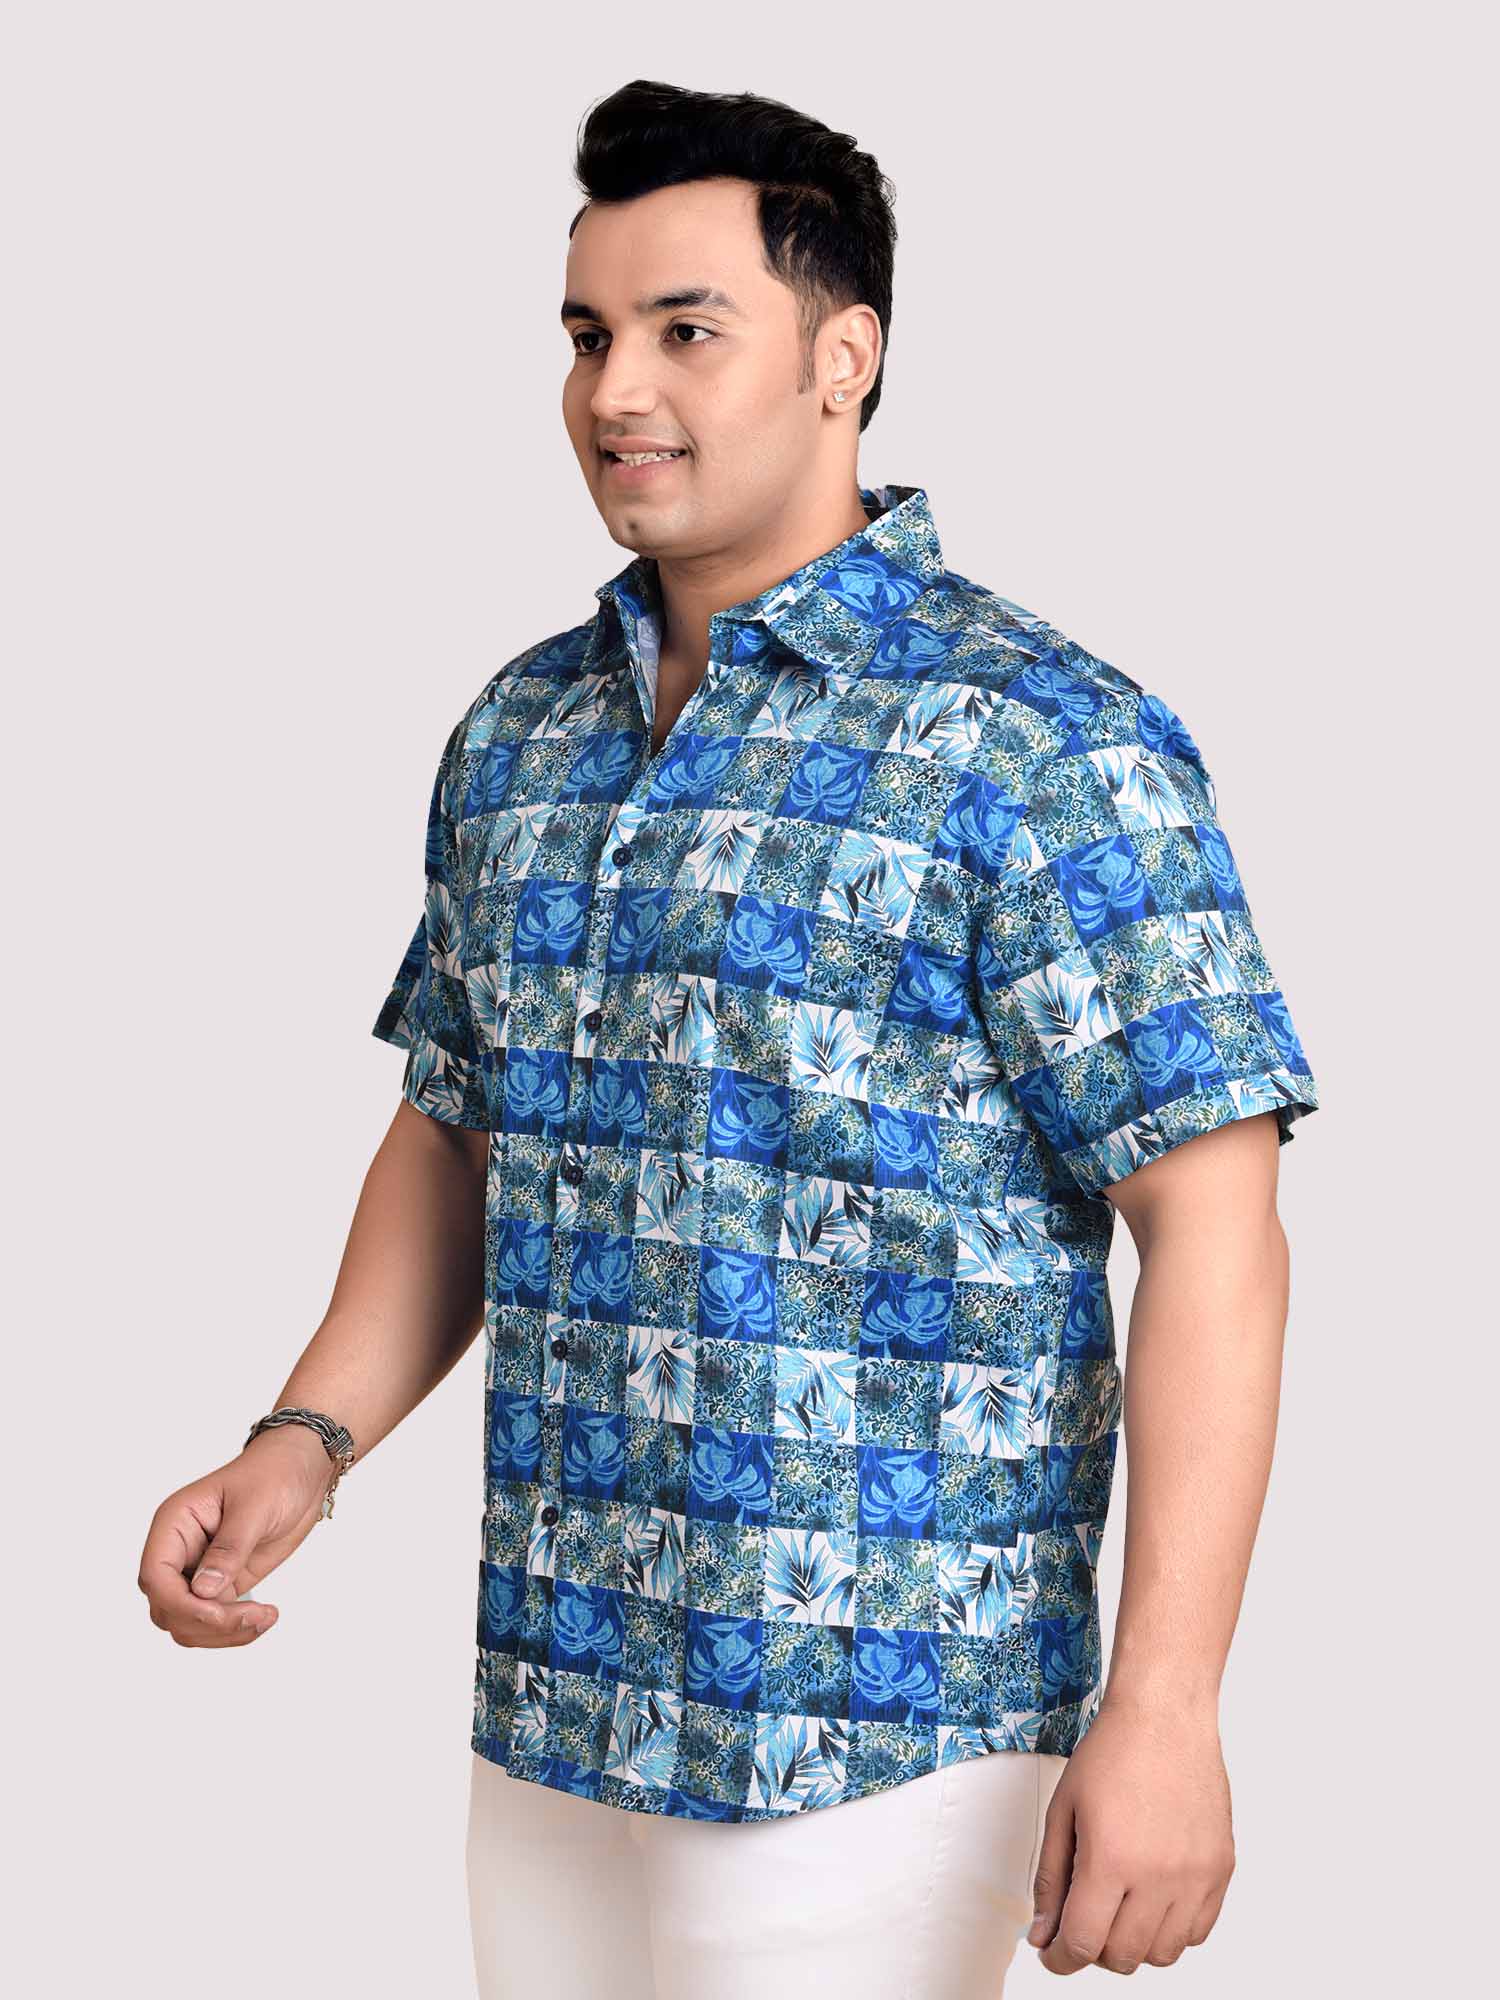 Checkers Digital Printed Shirt Men's Plus Size